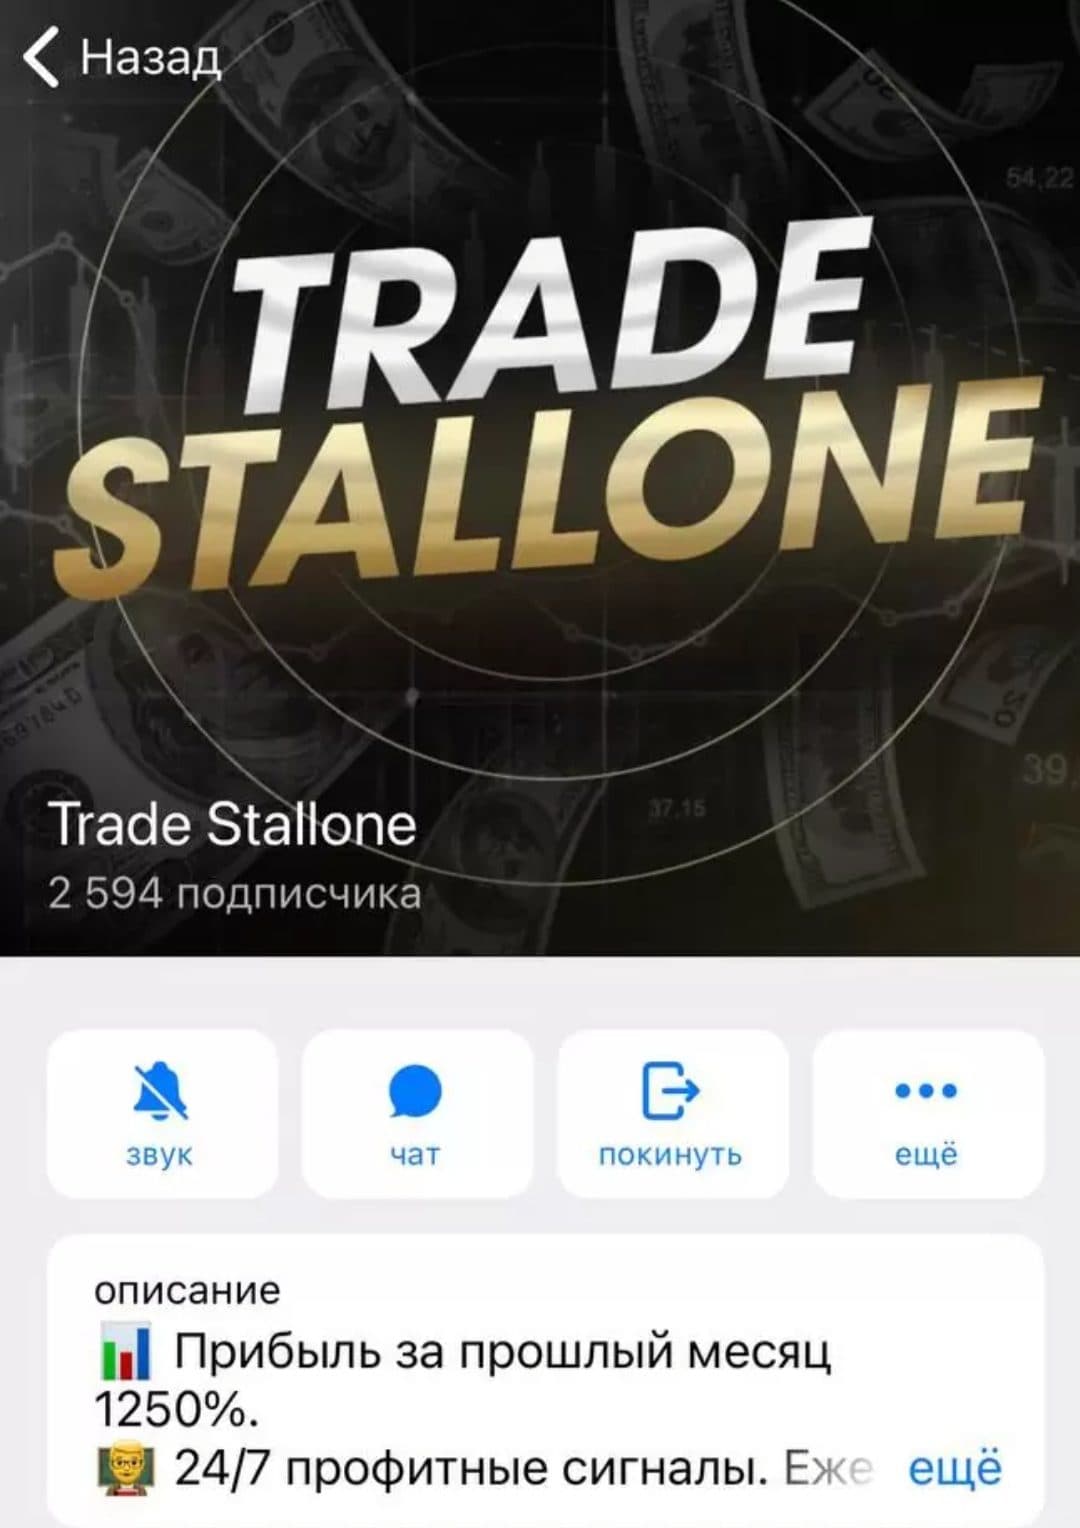 Trade Stallone телеграмм